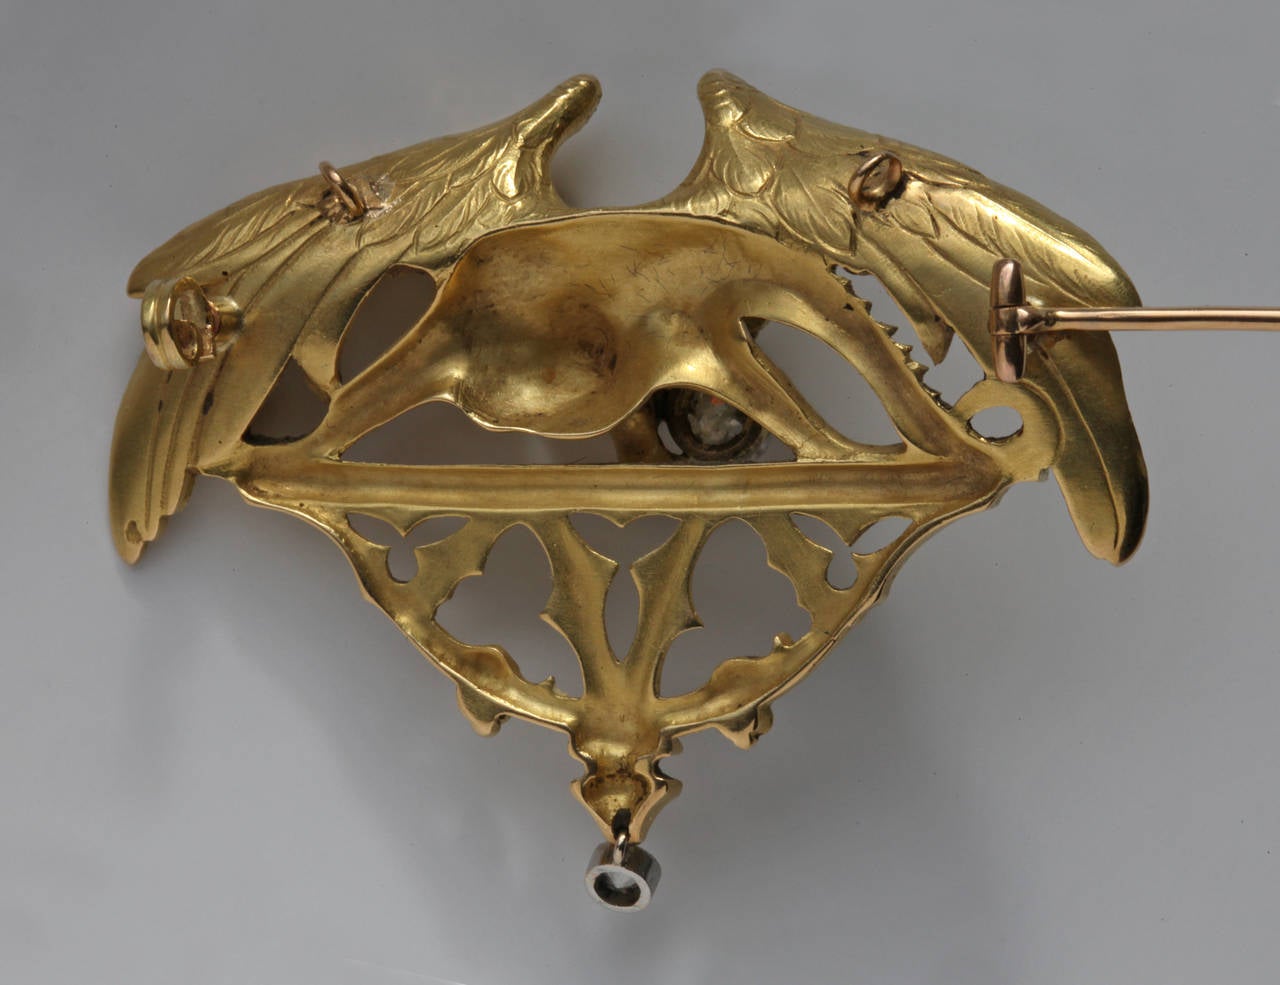 Renaissance Revival Gothic Chimera Diamond Gold Pendant Brooch